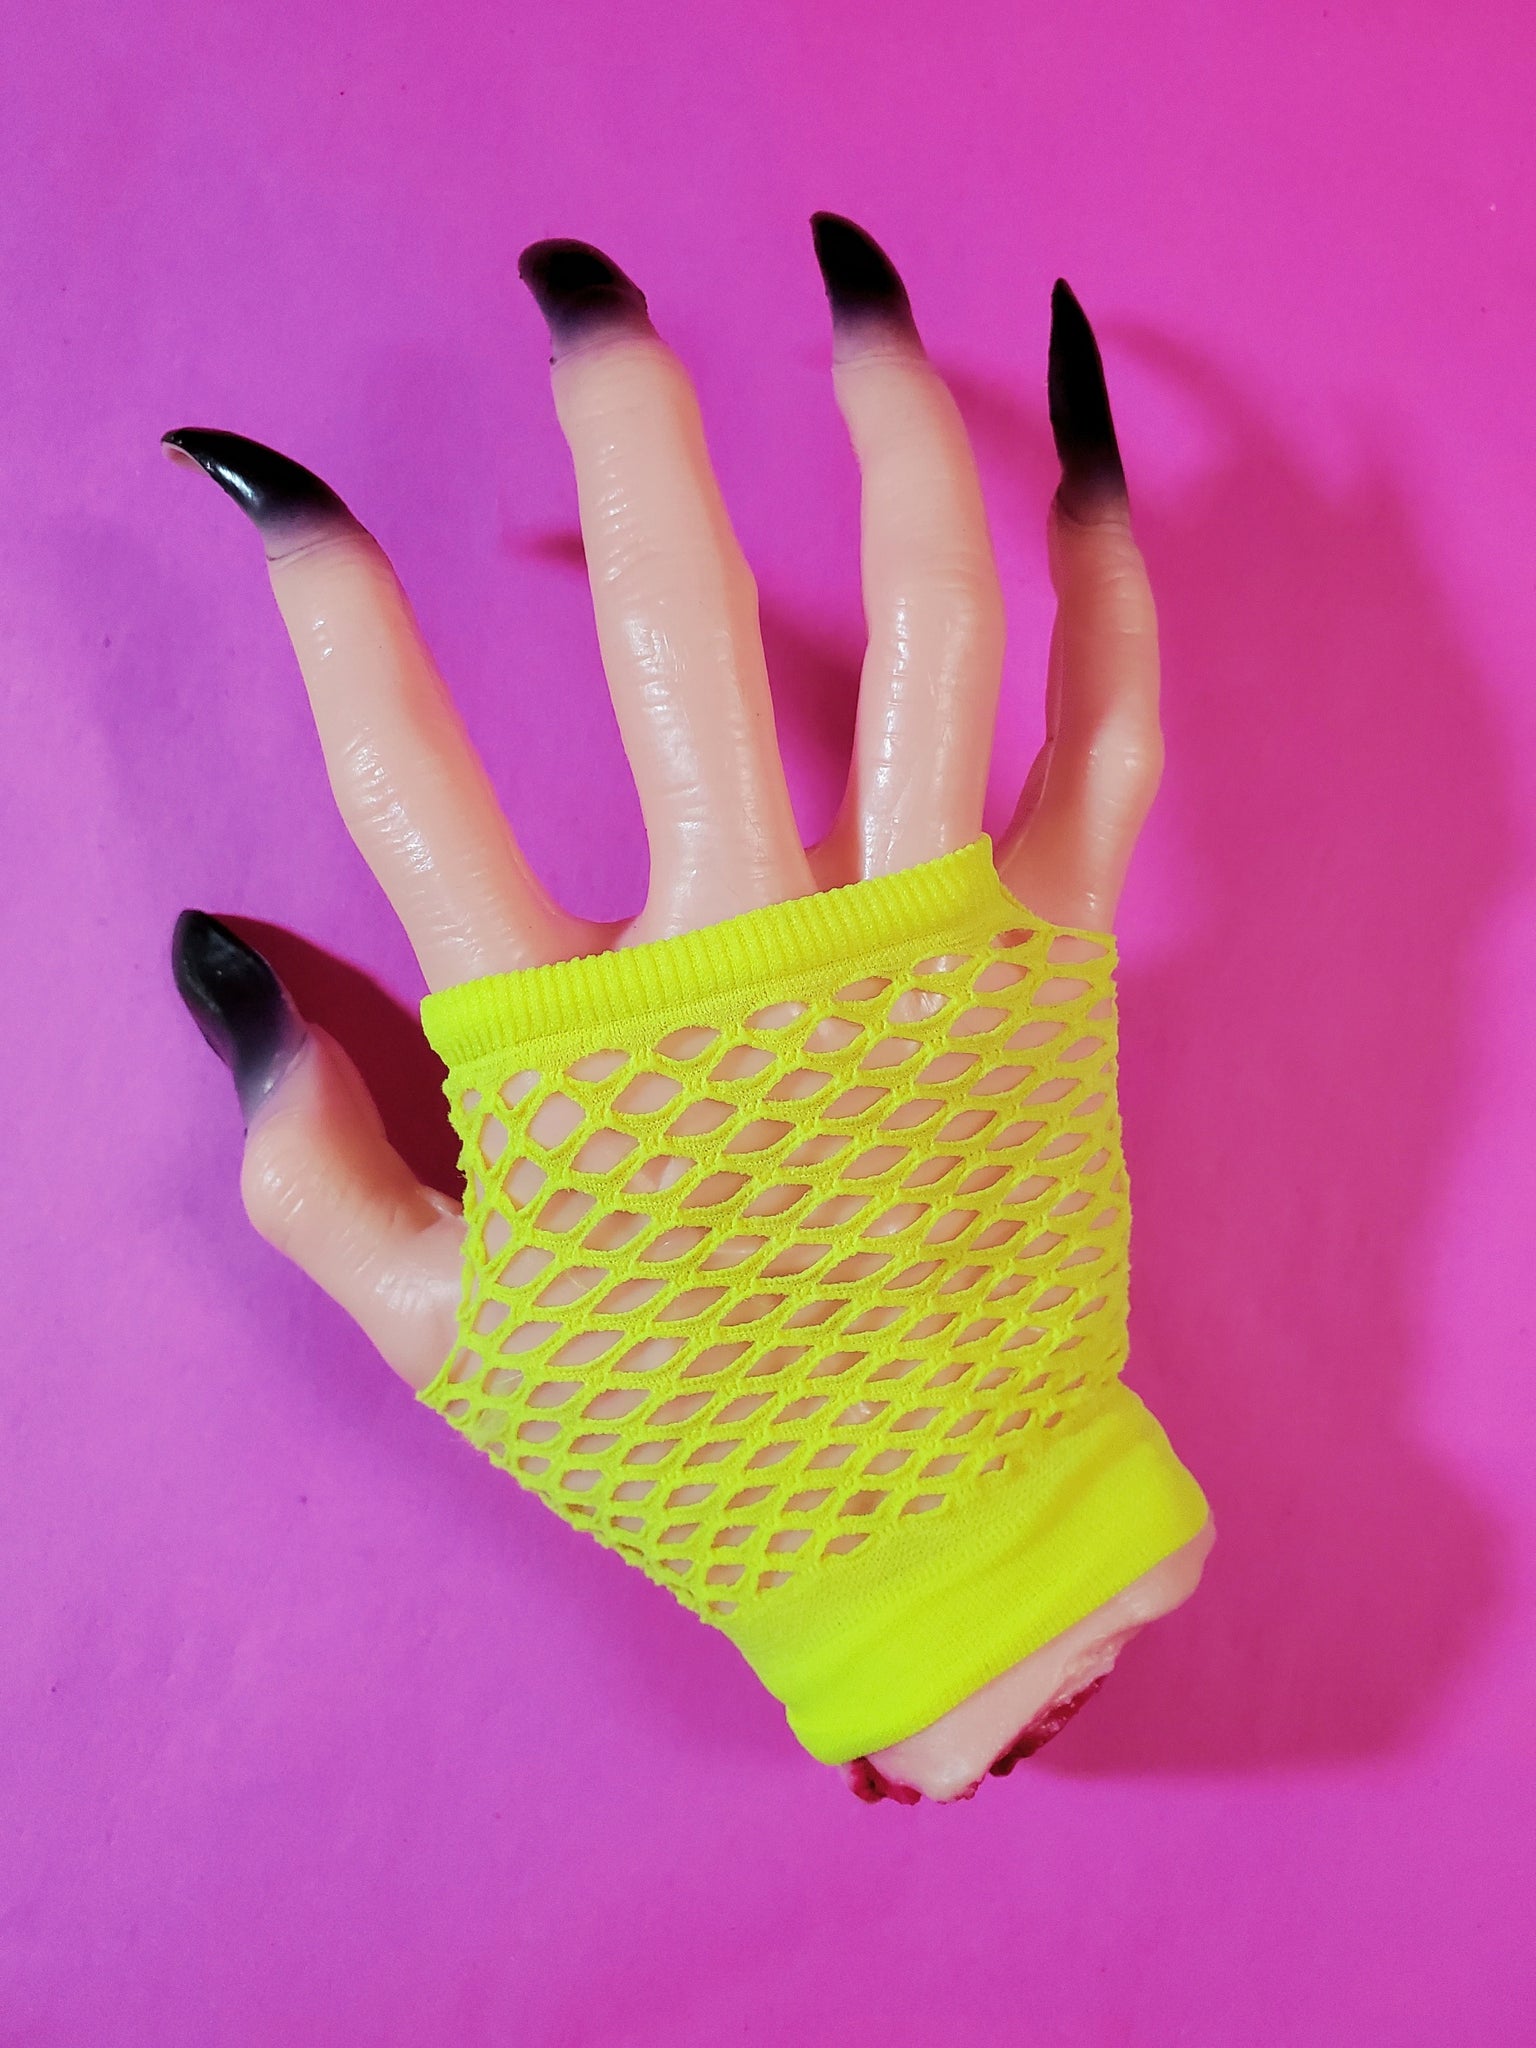 Wrist-length bright neon yellow fingerless fishnet glove, shown on halloween prop hand